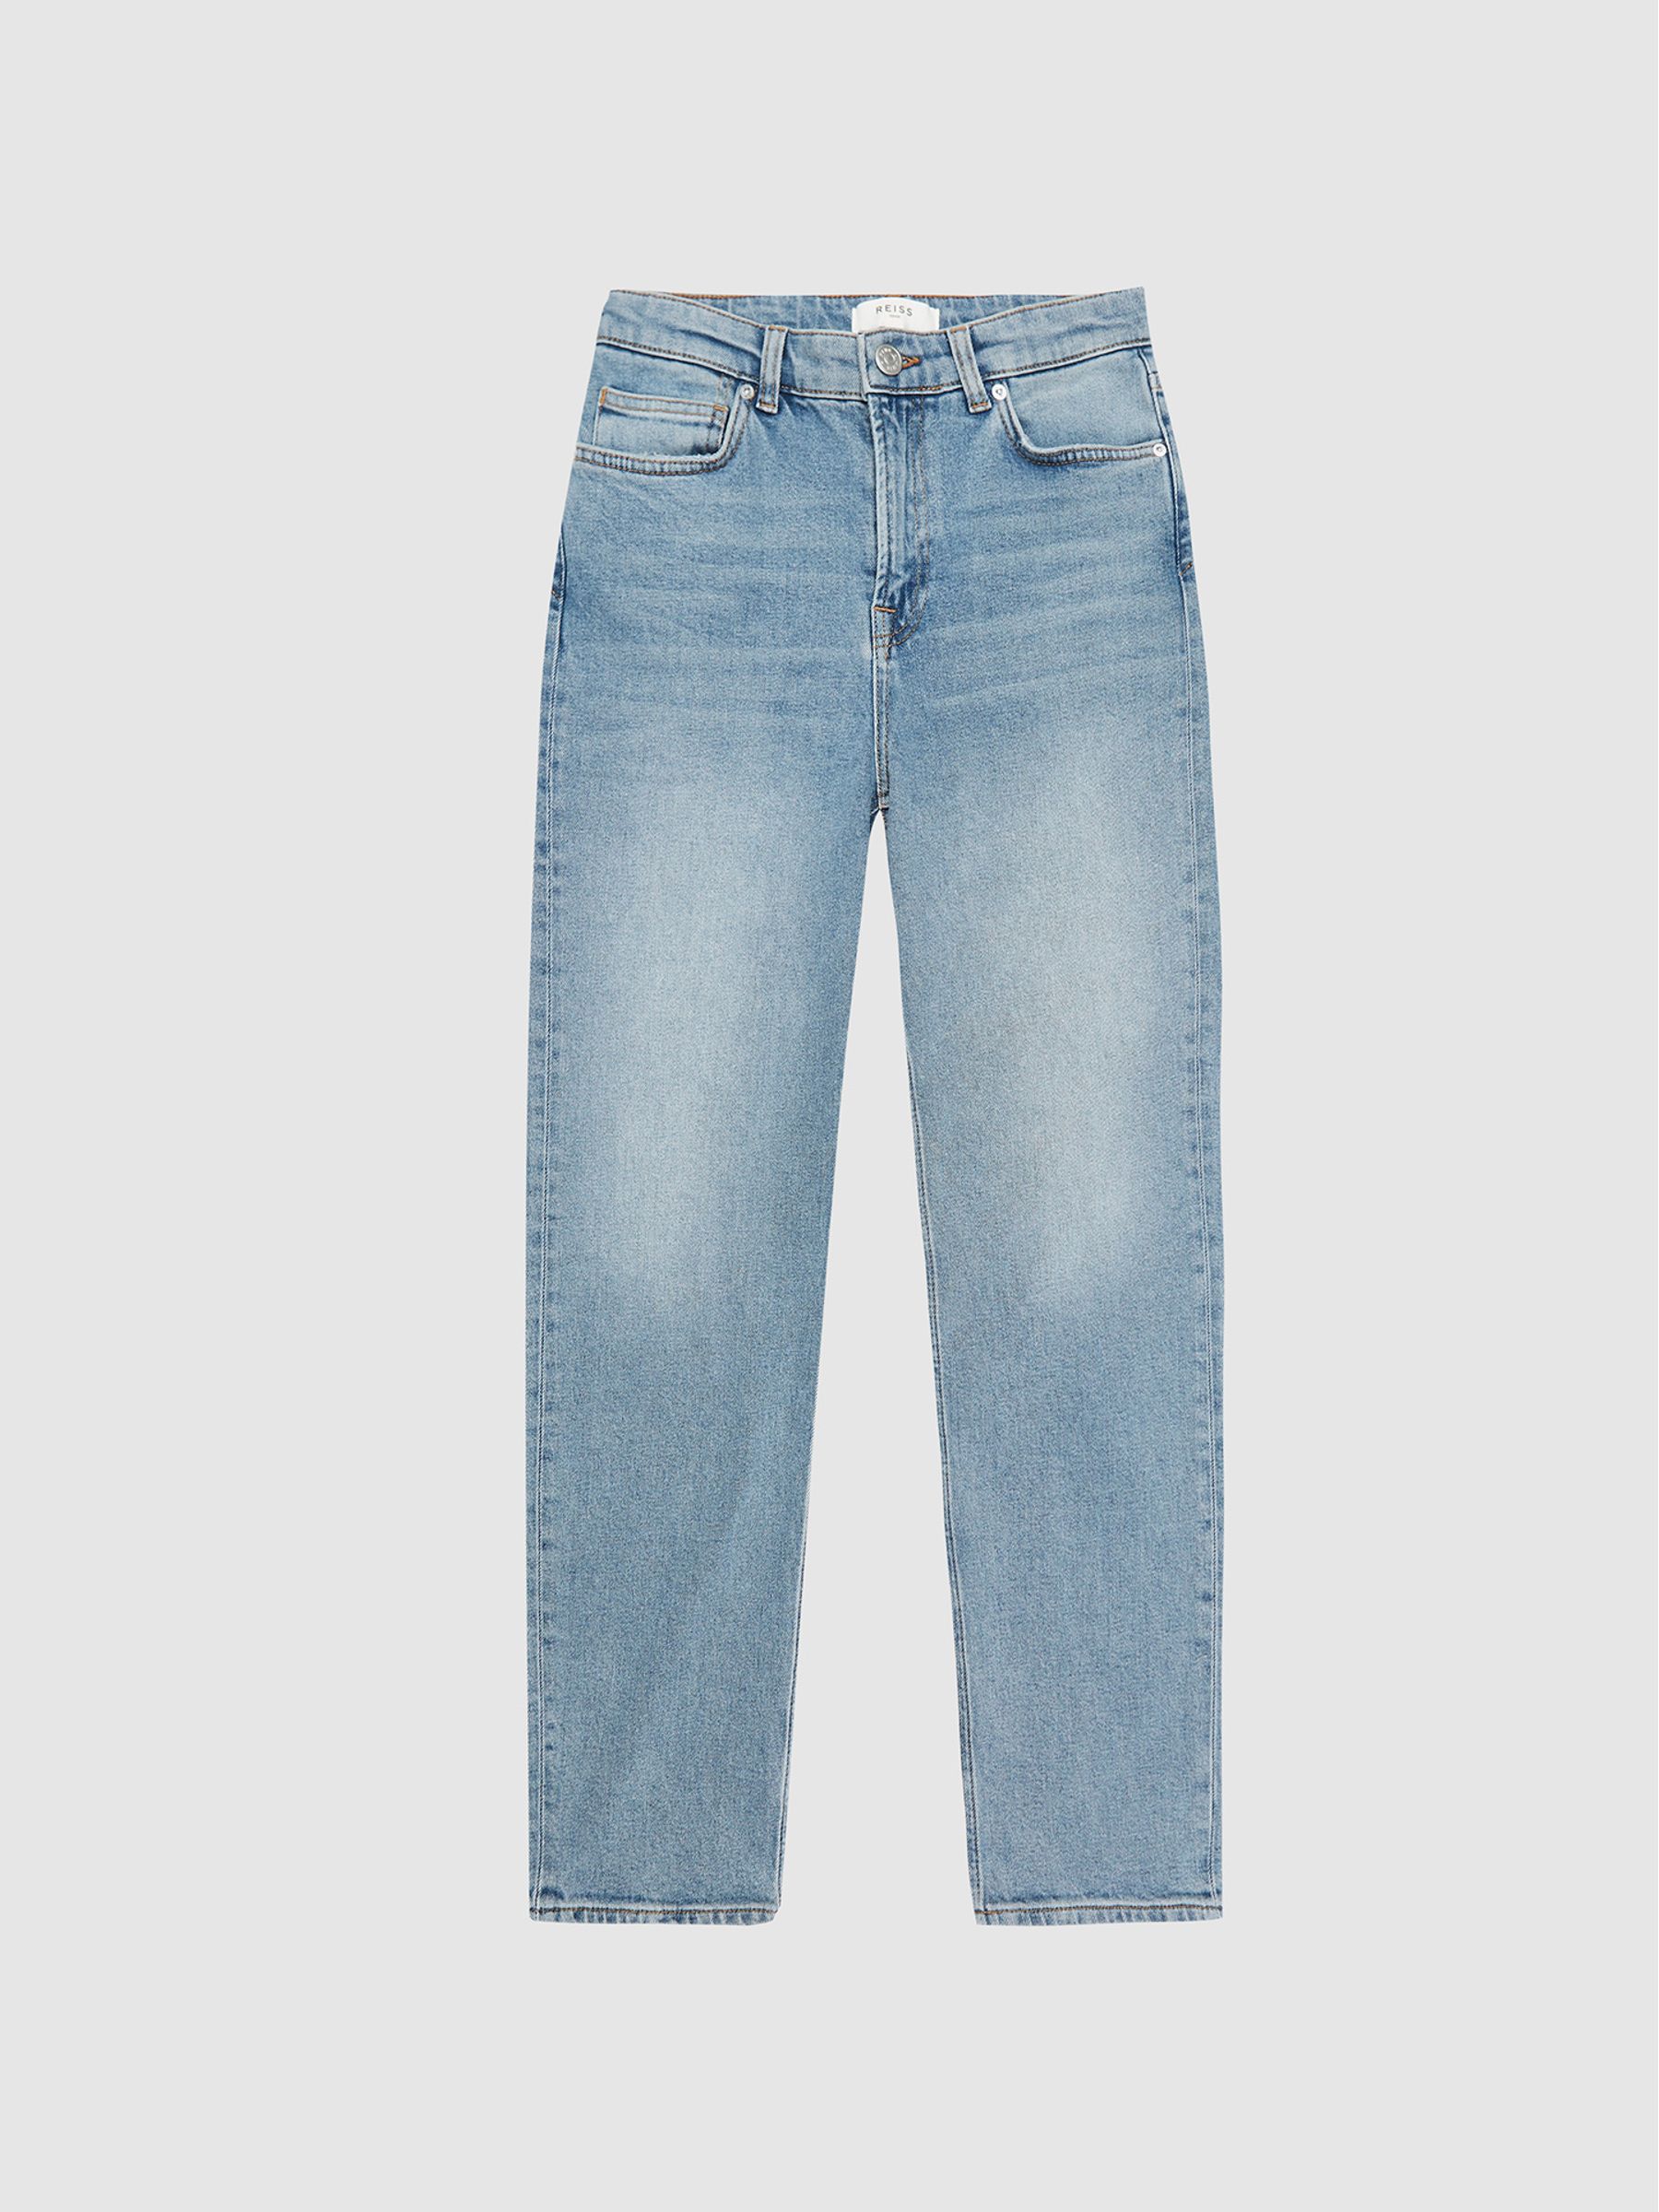 Reiss Mid Blue Bay High Rise Slim Straight Cut Jeans | REISS USA